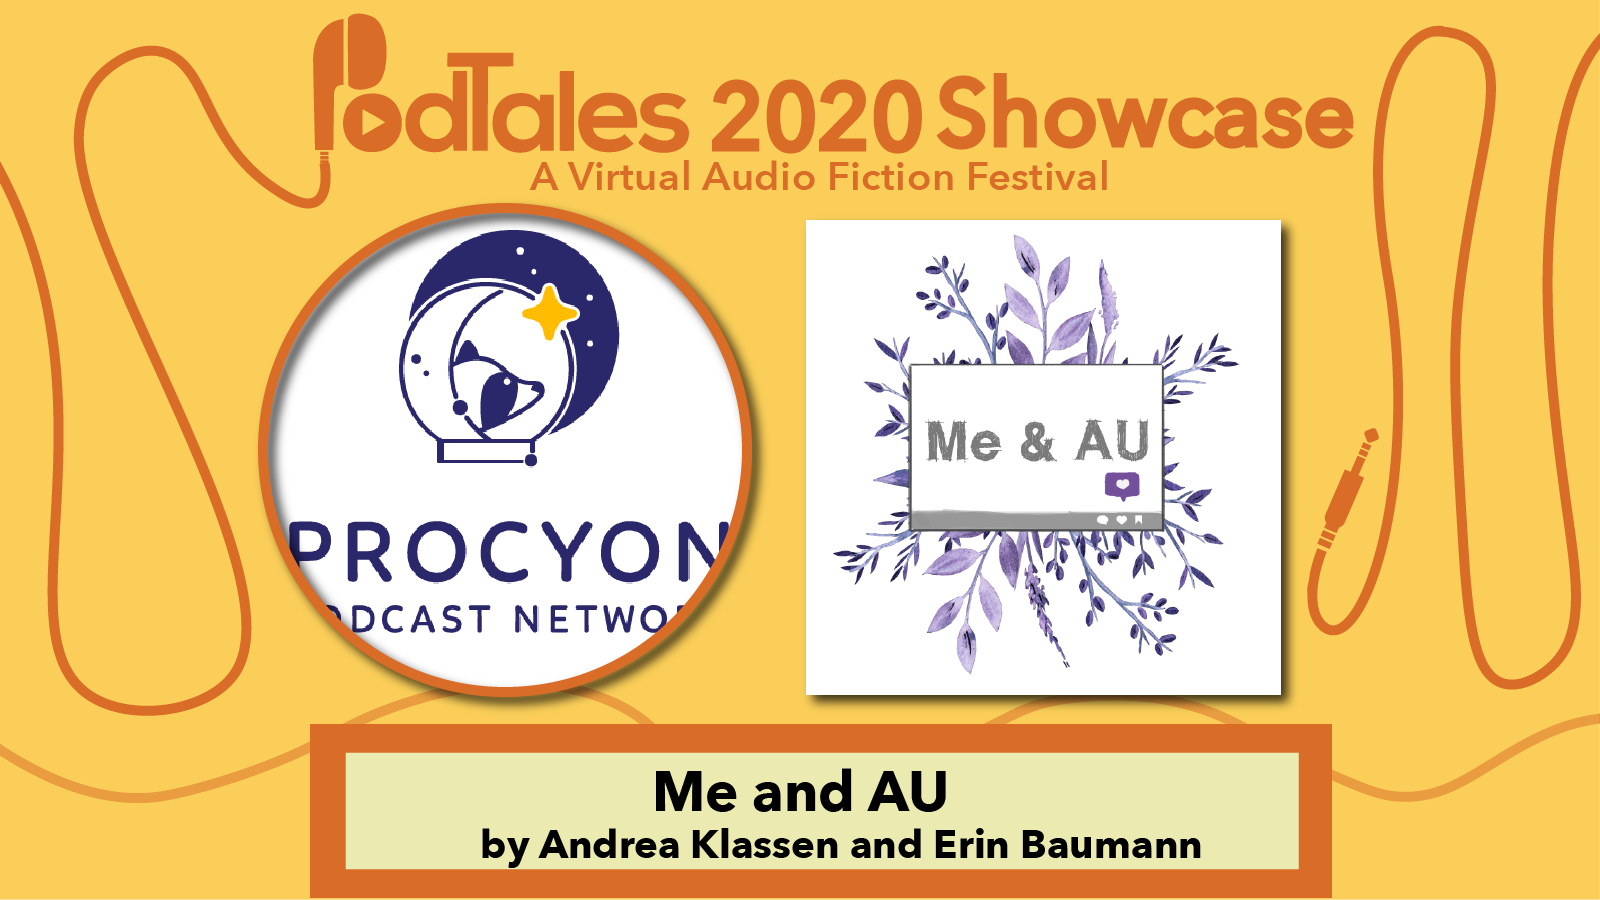 Text reading “PodTales 2020 Showcase: A Virtual Audio Fiction Festival”, Procyon Podcast Network Logo, Show Art for Me and AU, Text reading “Me and AU by Andrea Klassen and Erin Baumann”